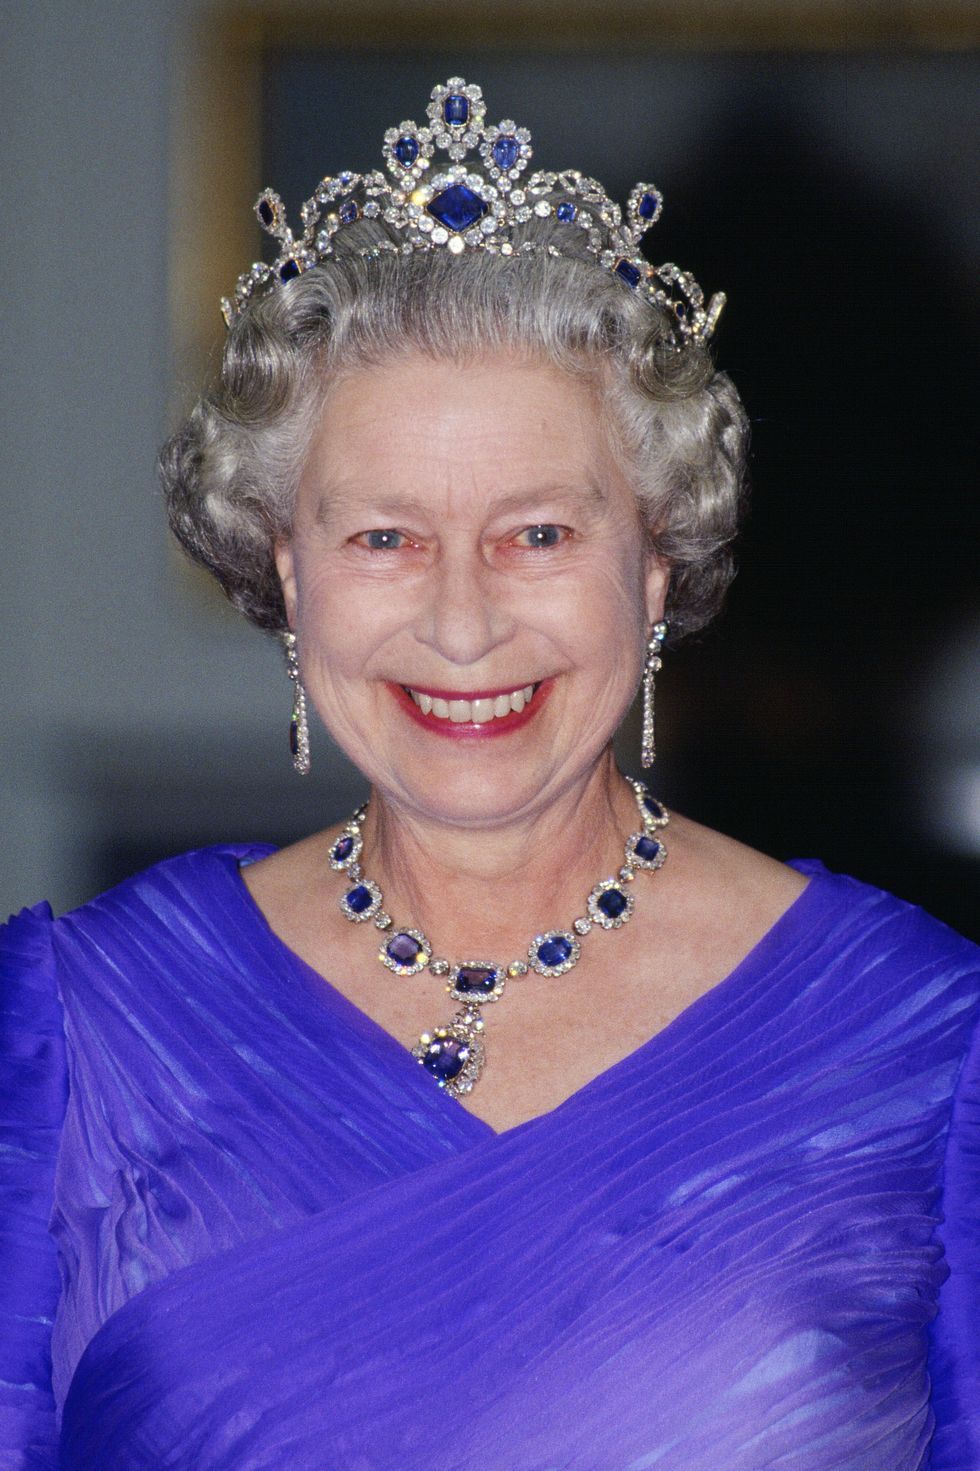 9 noble reigns that Queen Elizabeth II had during her lifetime